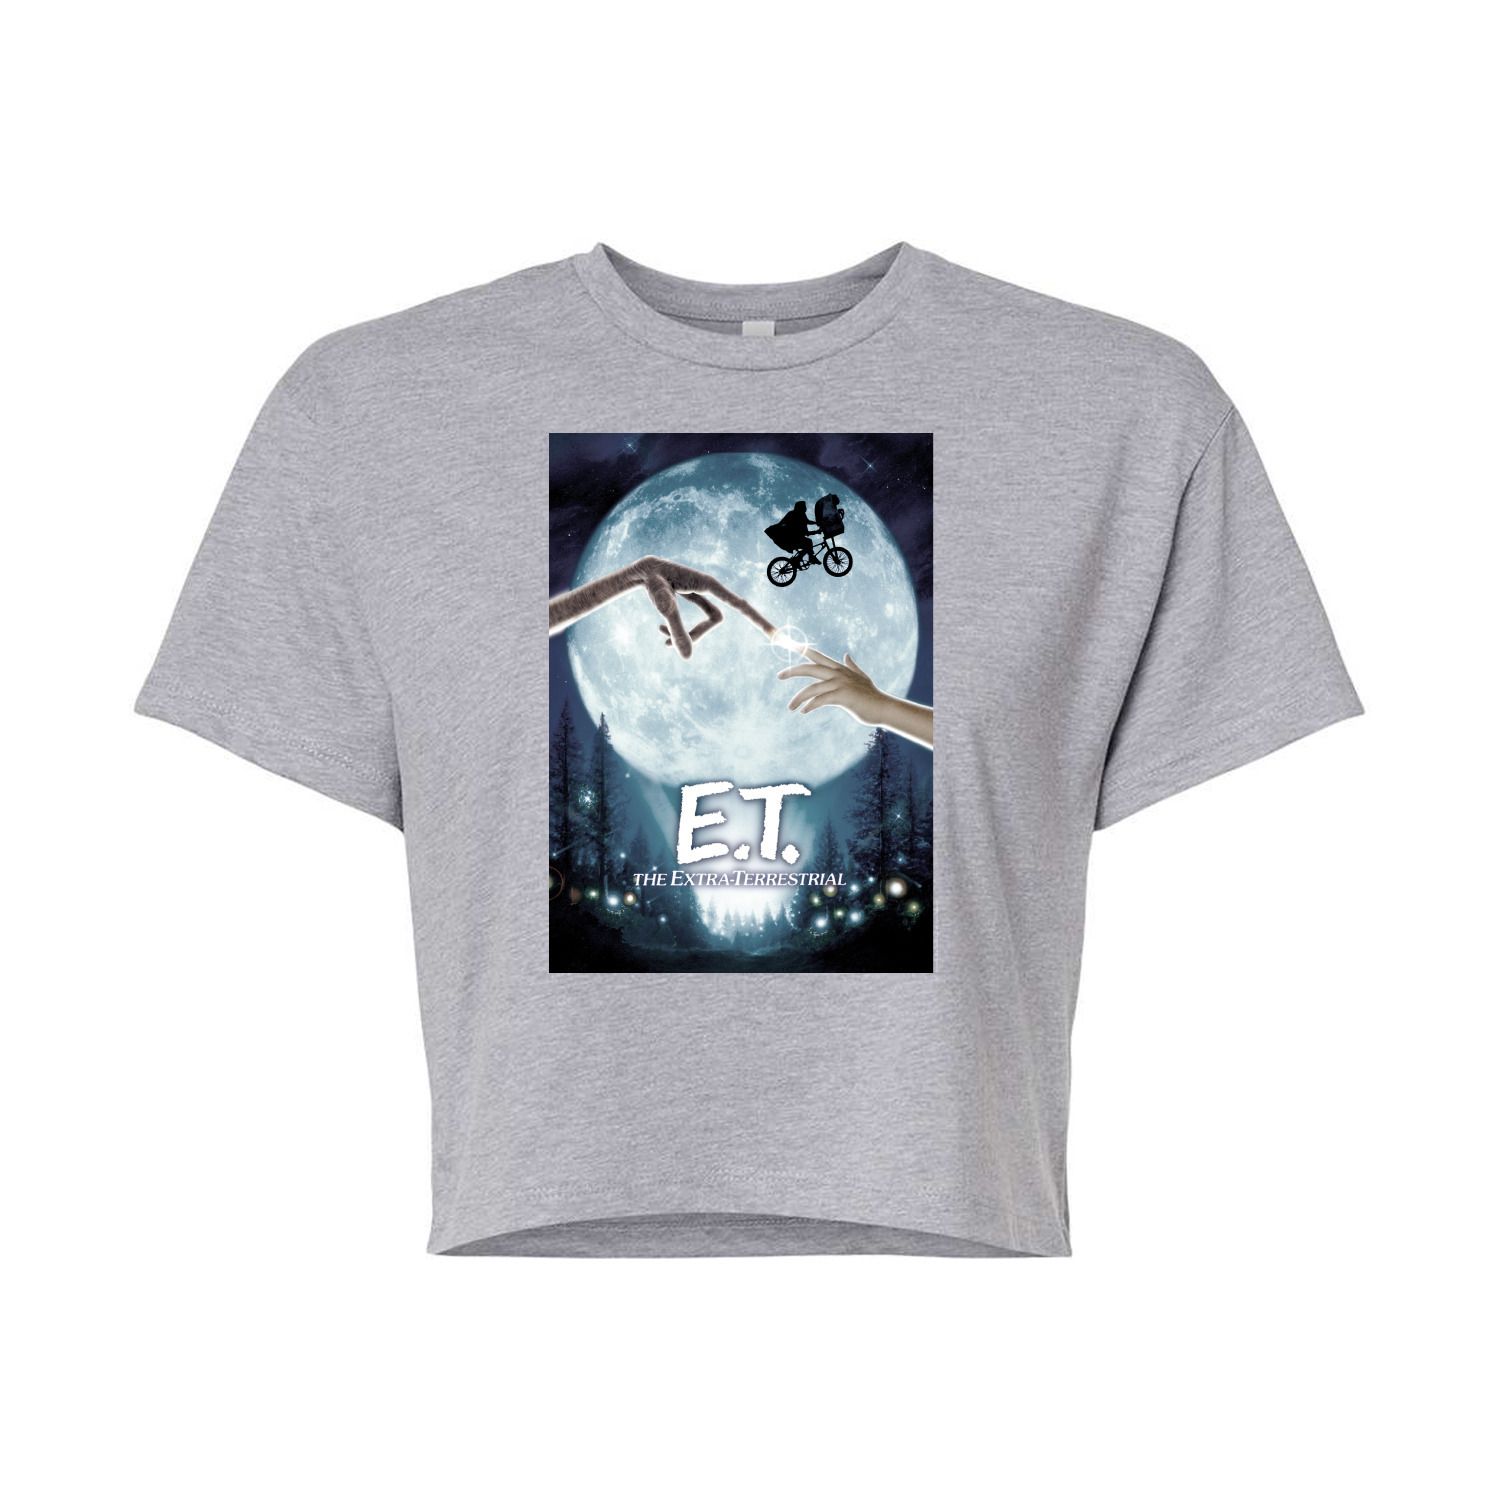 Юниоры E.T. Укороченная футболка с рисунком Bike Moon Licensed Character юниоры e t укороченная футболка с рисунком shine together licensed character белый